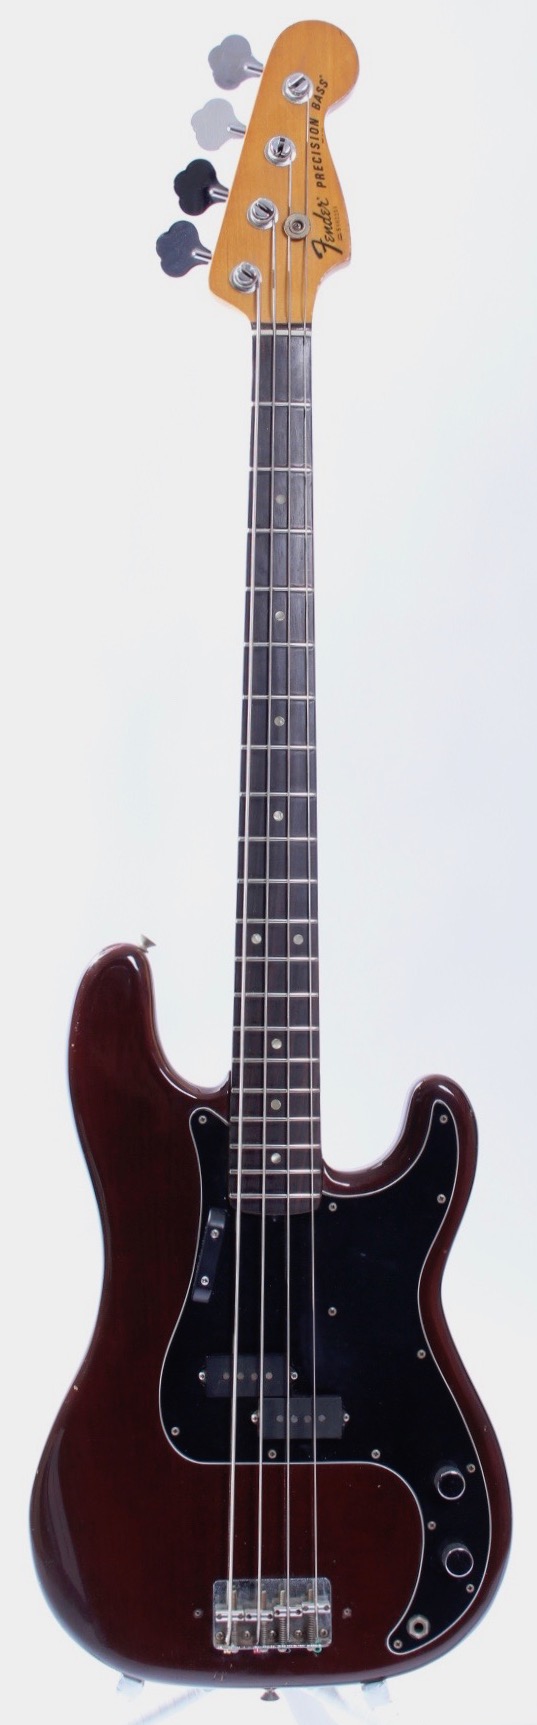 Squeak blyant Elskede Fender Precision Bass 1978 Mocha Brown Bass For Sale Yeahman's Guitars